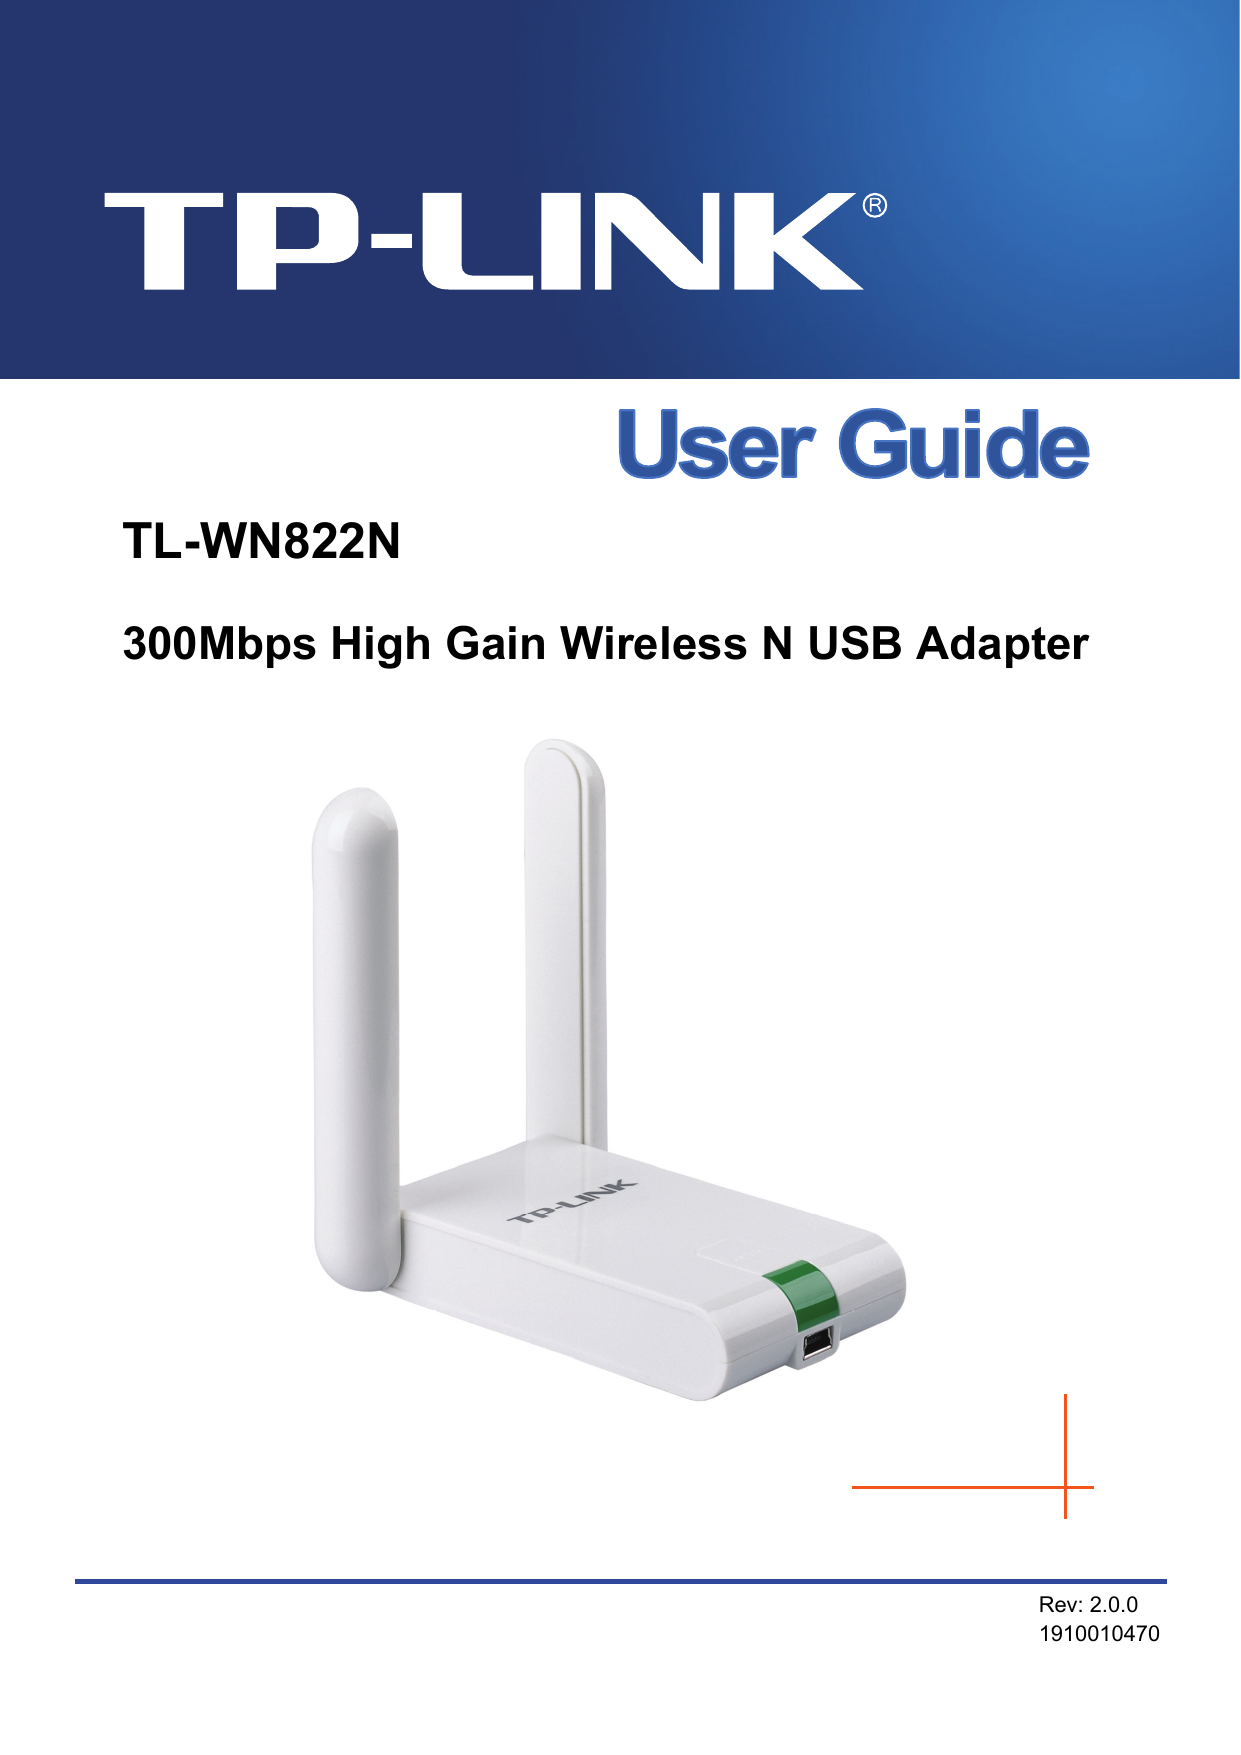    TL-WN822N 300Mbps High Gain Wireless N USB Adapter   Rev: 2.0.0 1910010470 